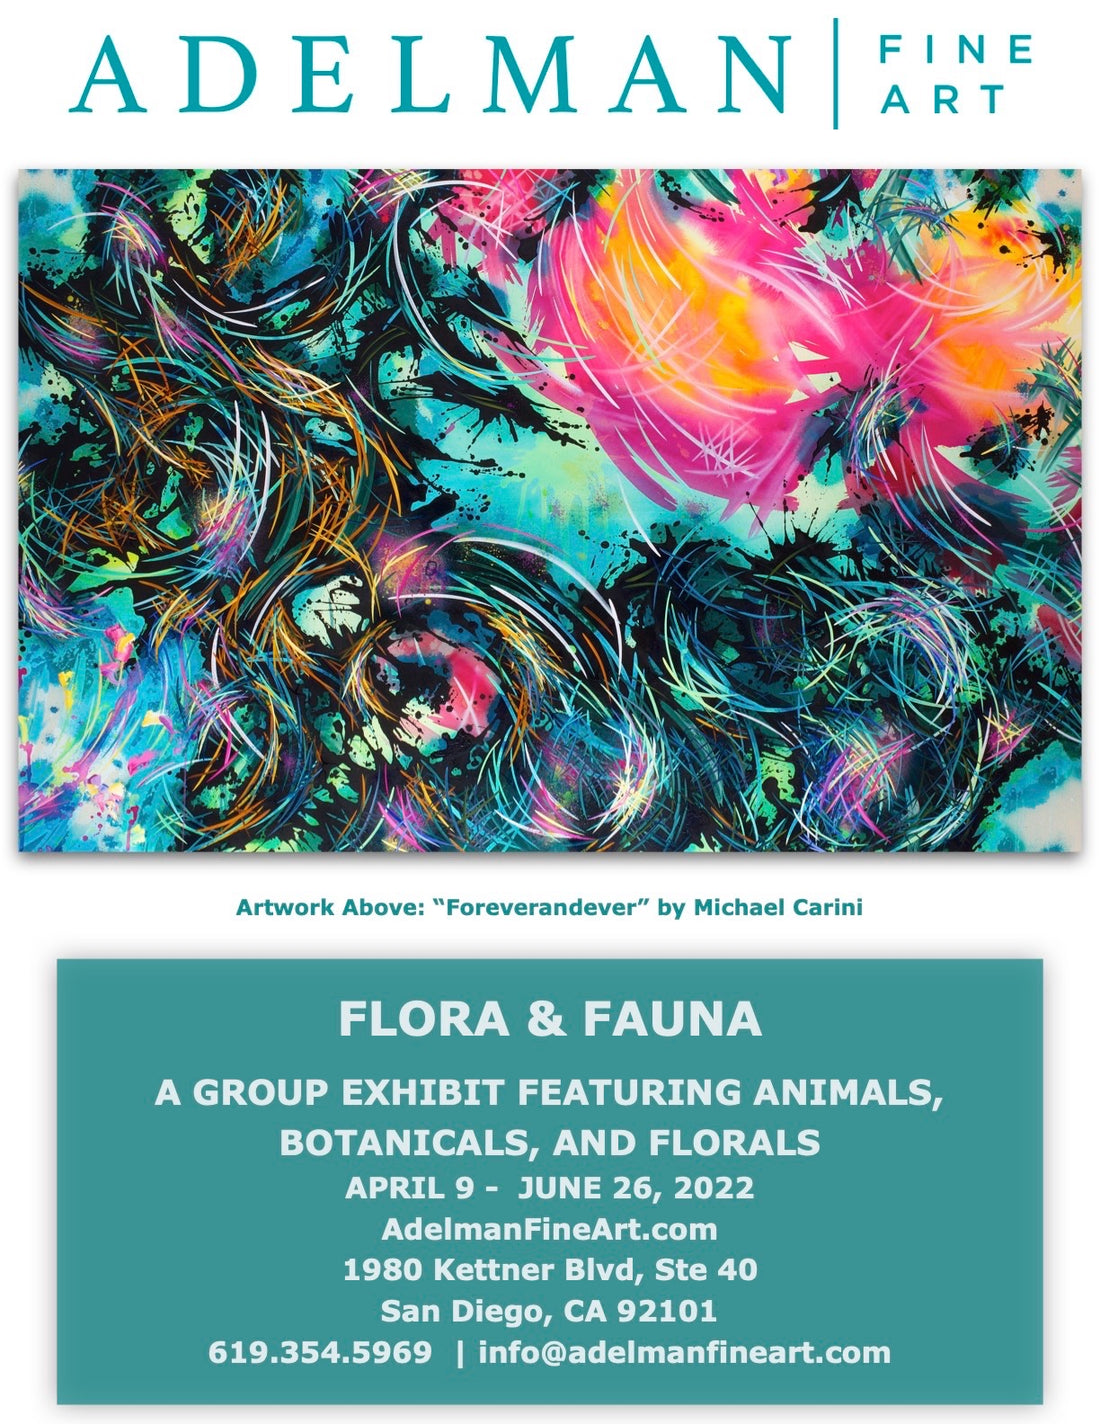 Flora & Fauna Art Exhibition At Adelman Fine Art April 9 - June 26.